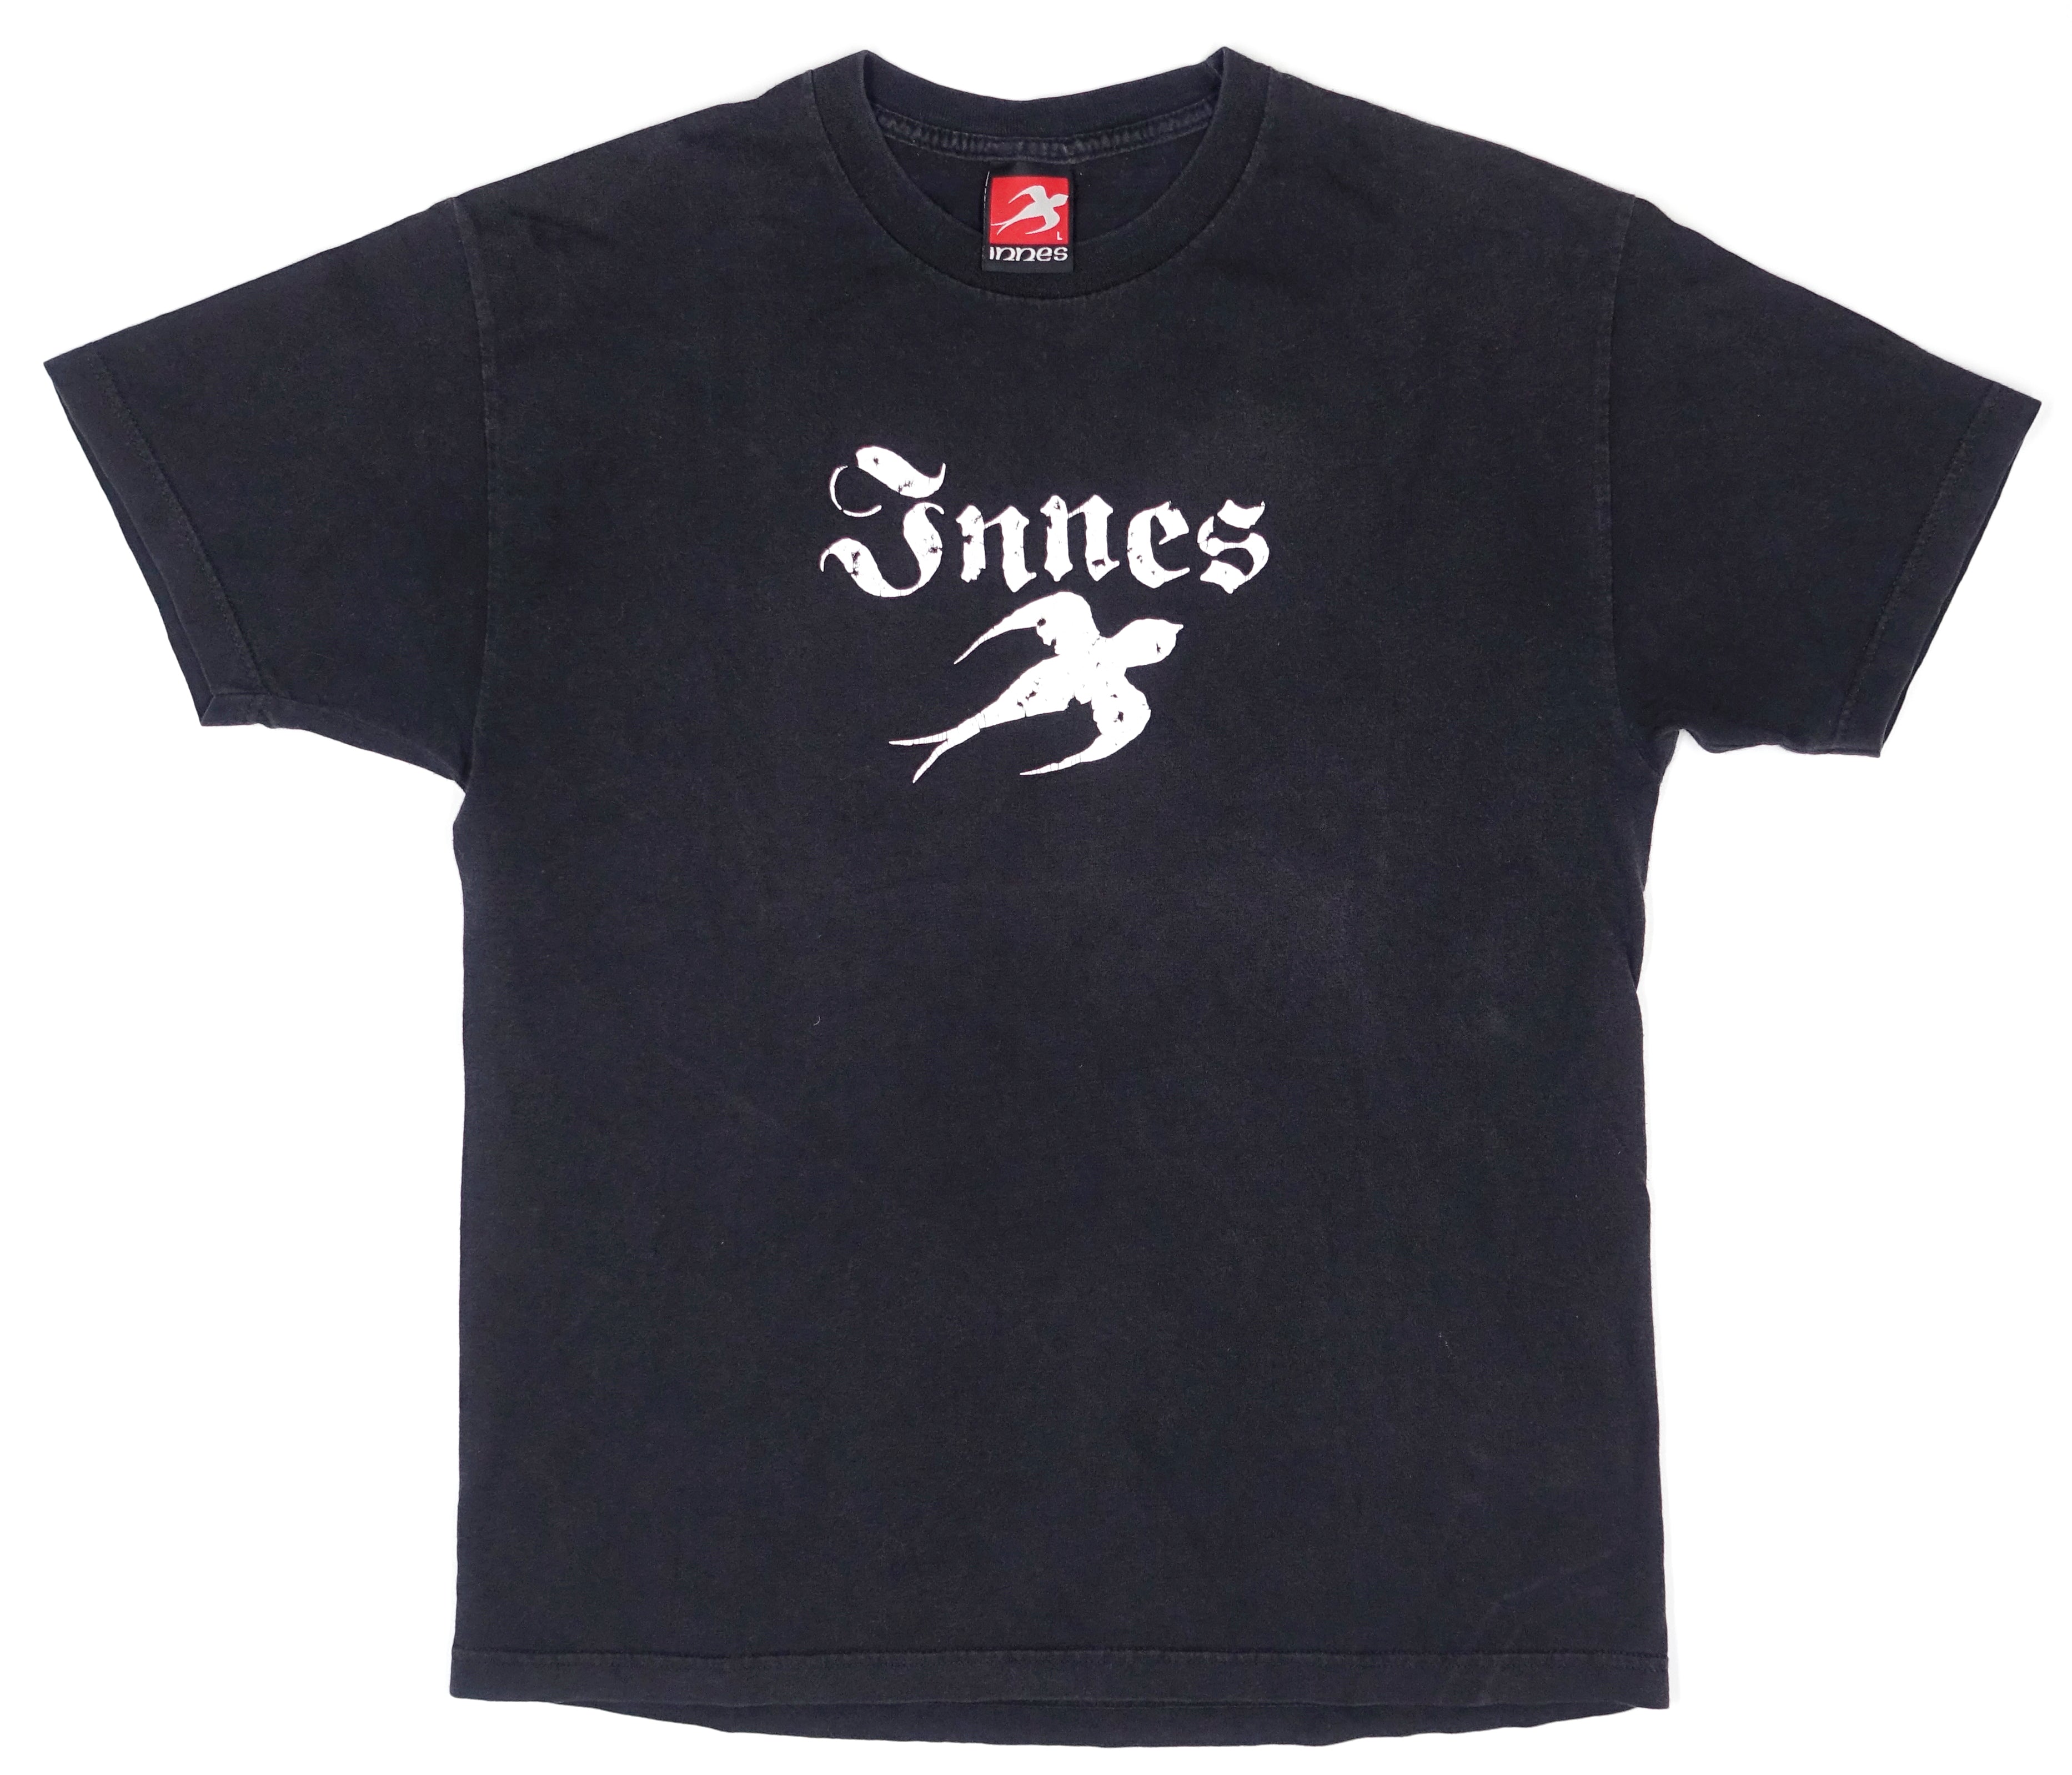 Innes Skateboard Clothing - Swallow Logo Shirt Size Large